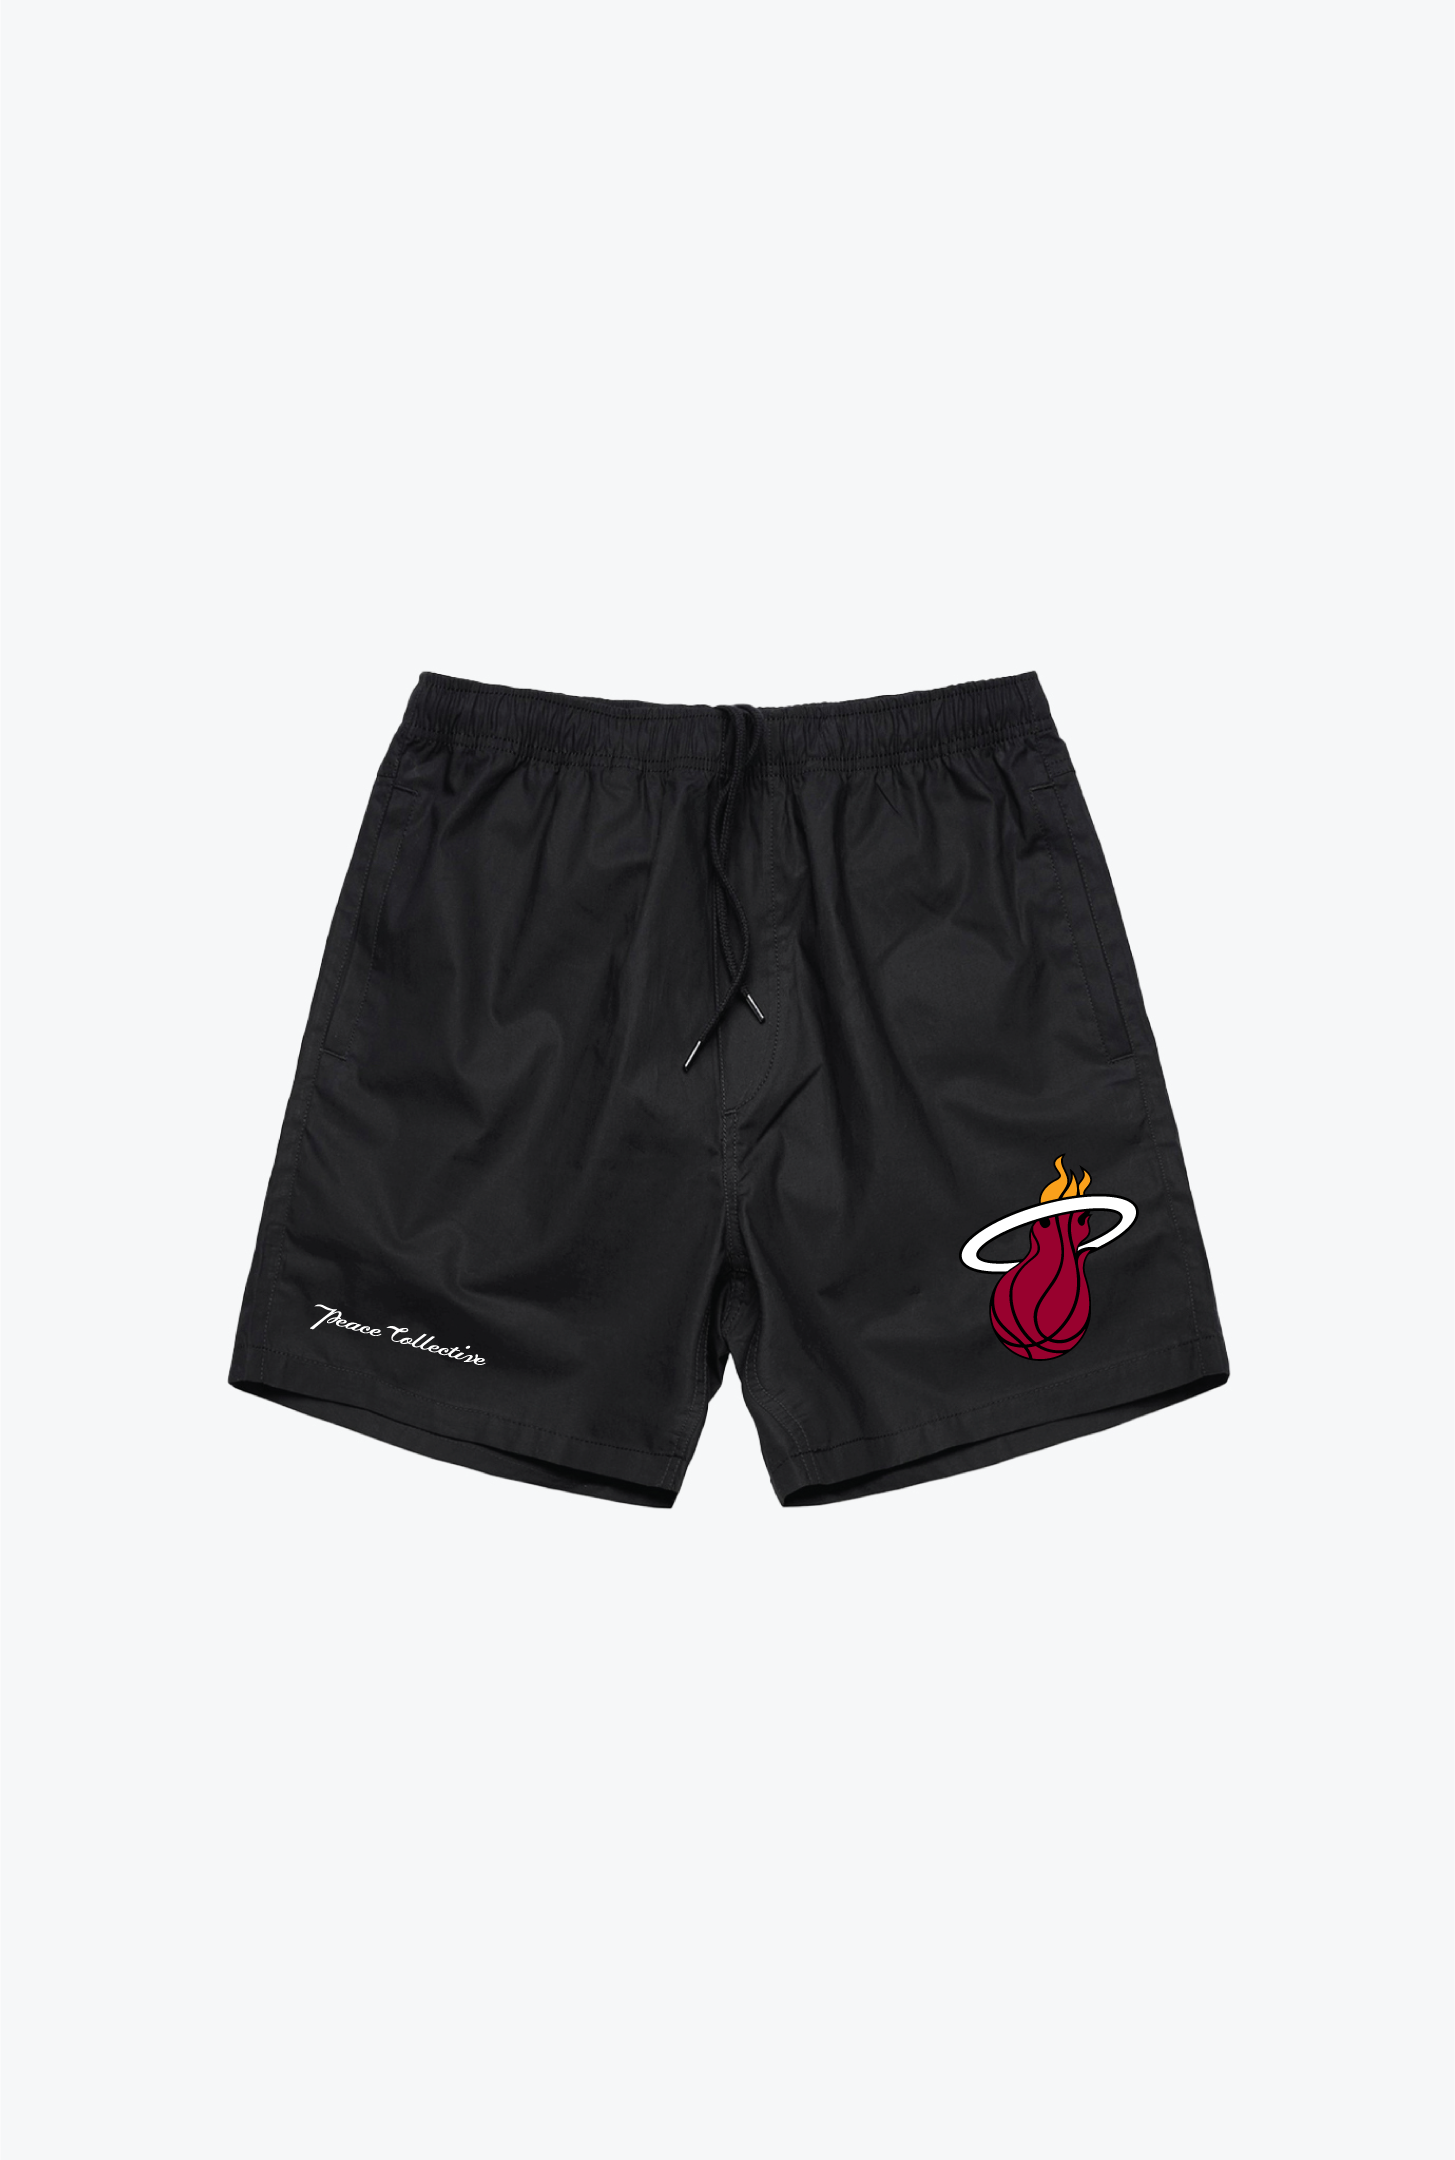 Miami Heat Board Shorts - Black